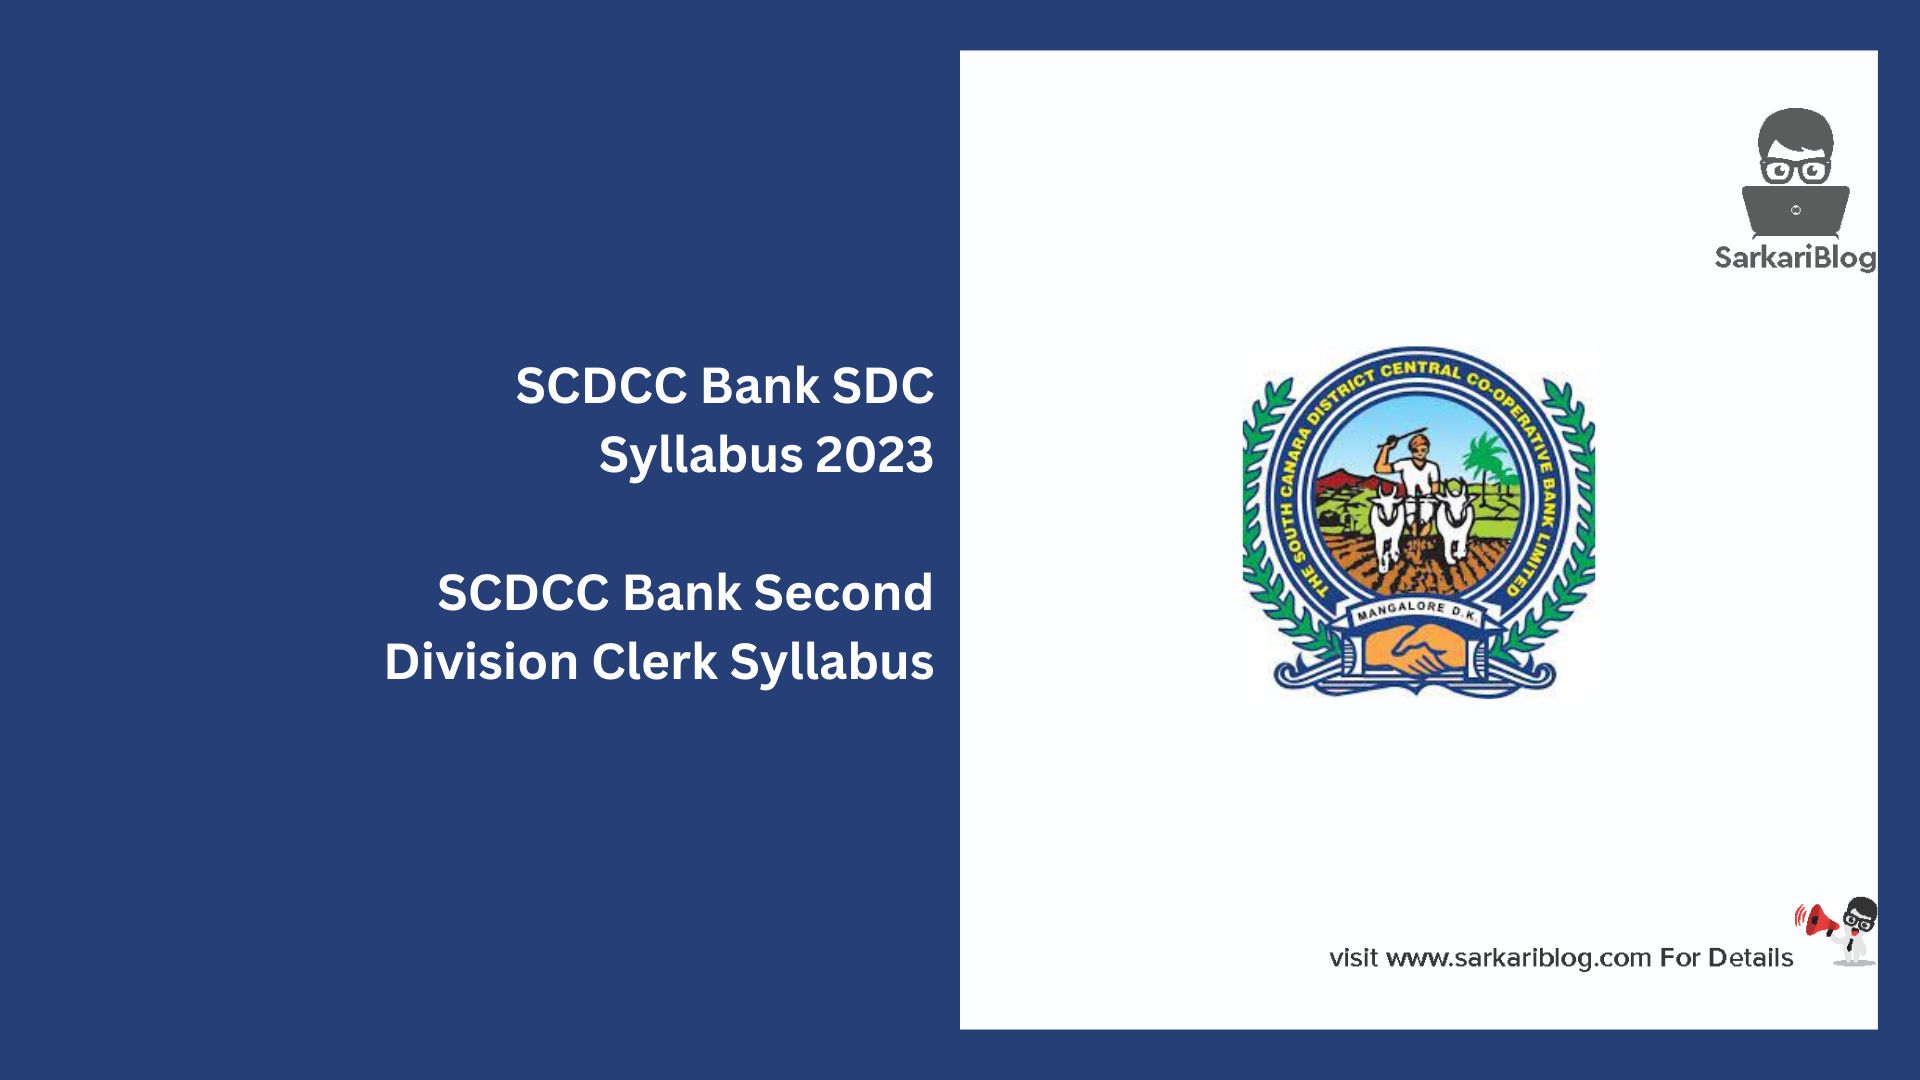 SCDCC Bank SDC Syllabus 2023